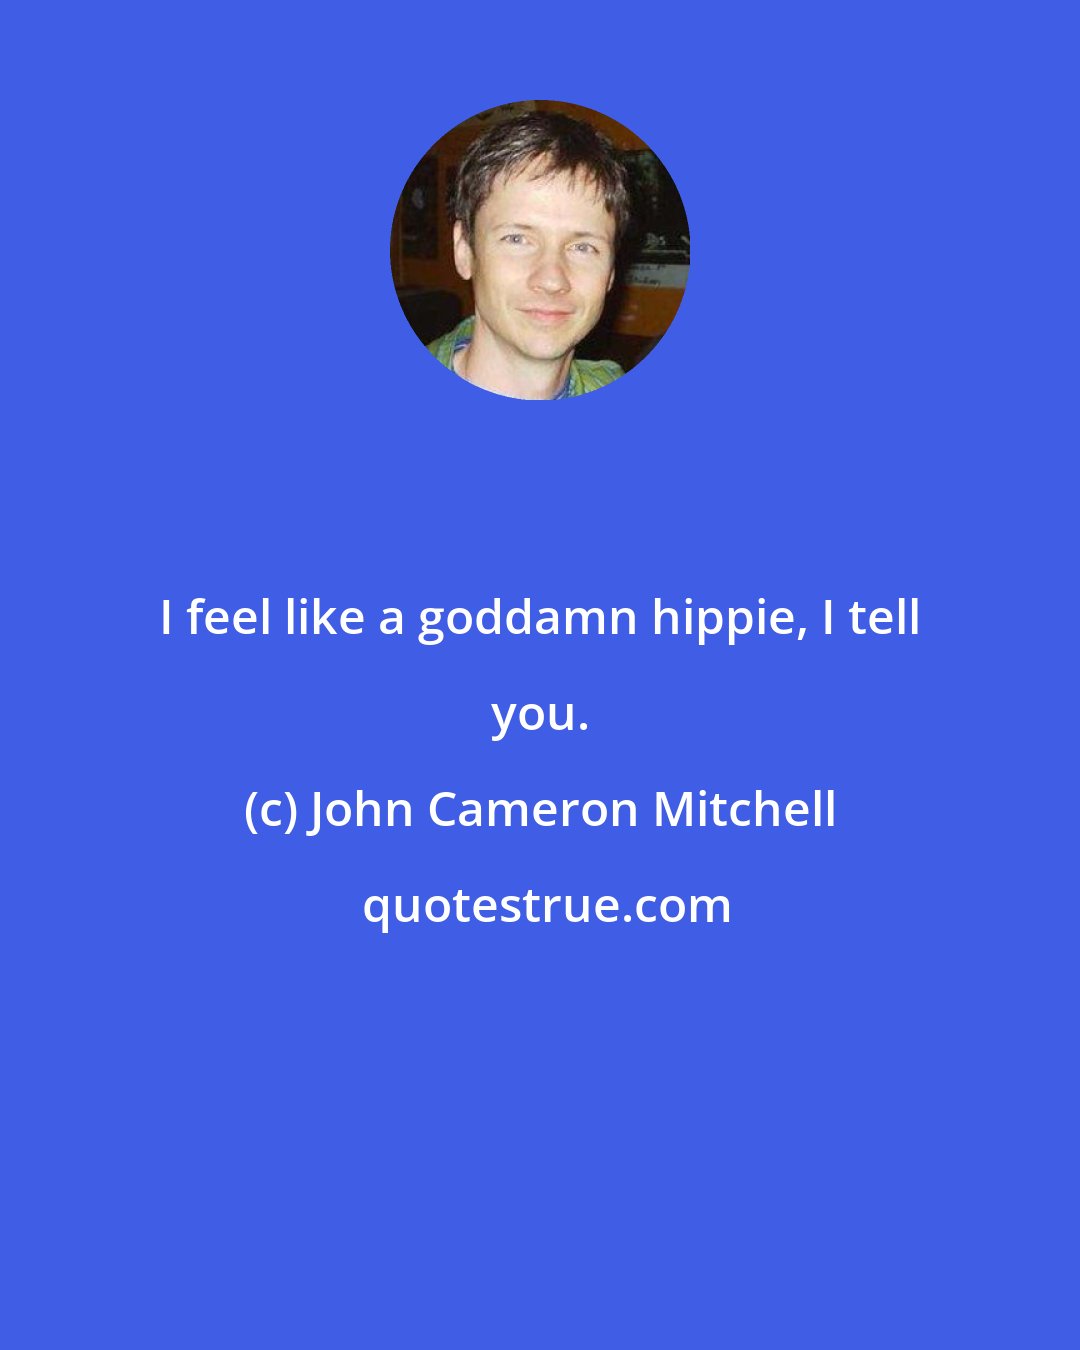 John Cameron Mitchell: I feel like a goddamn hippie, I tell you.